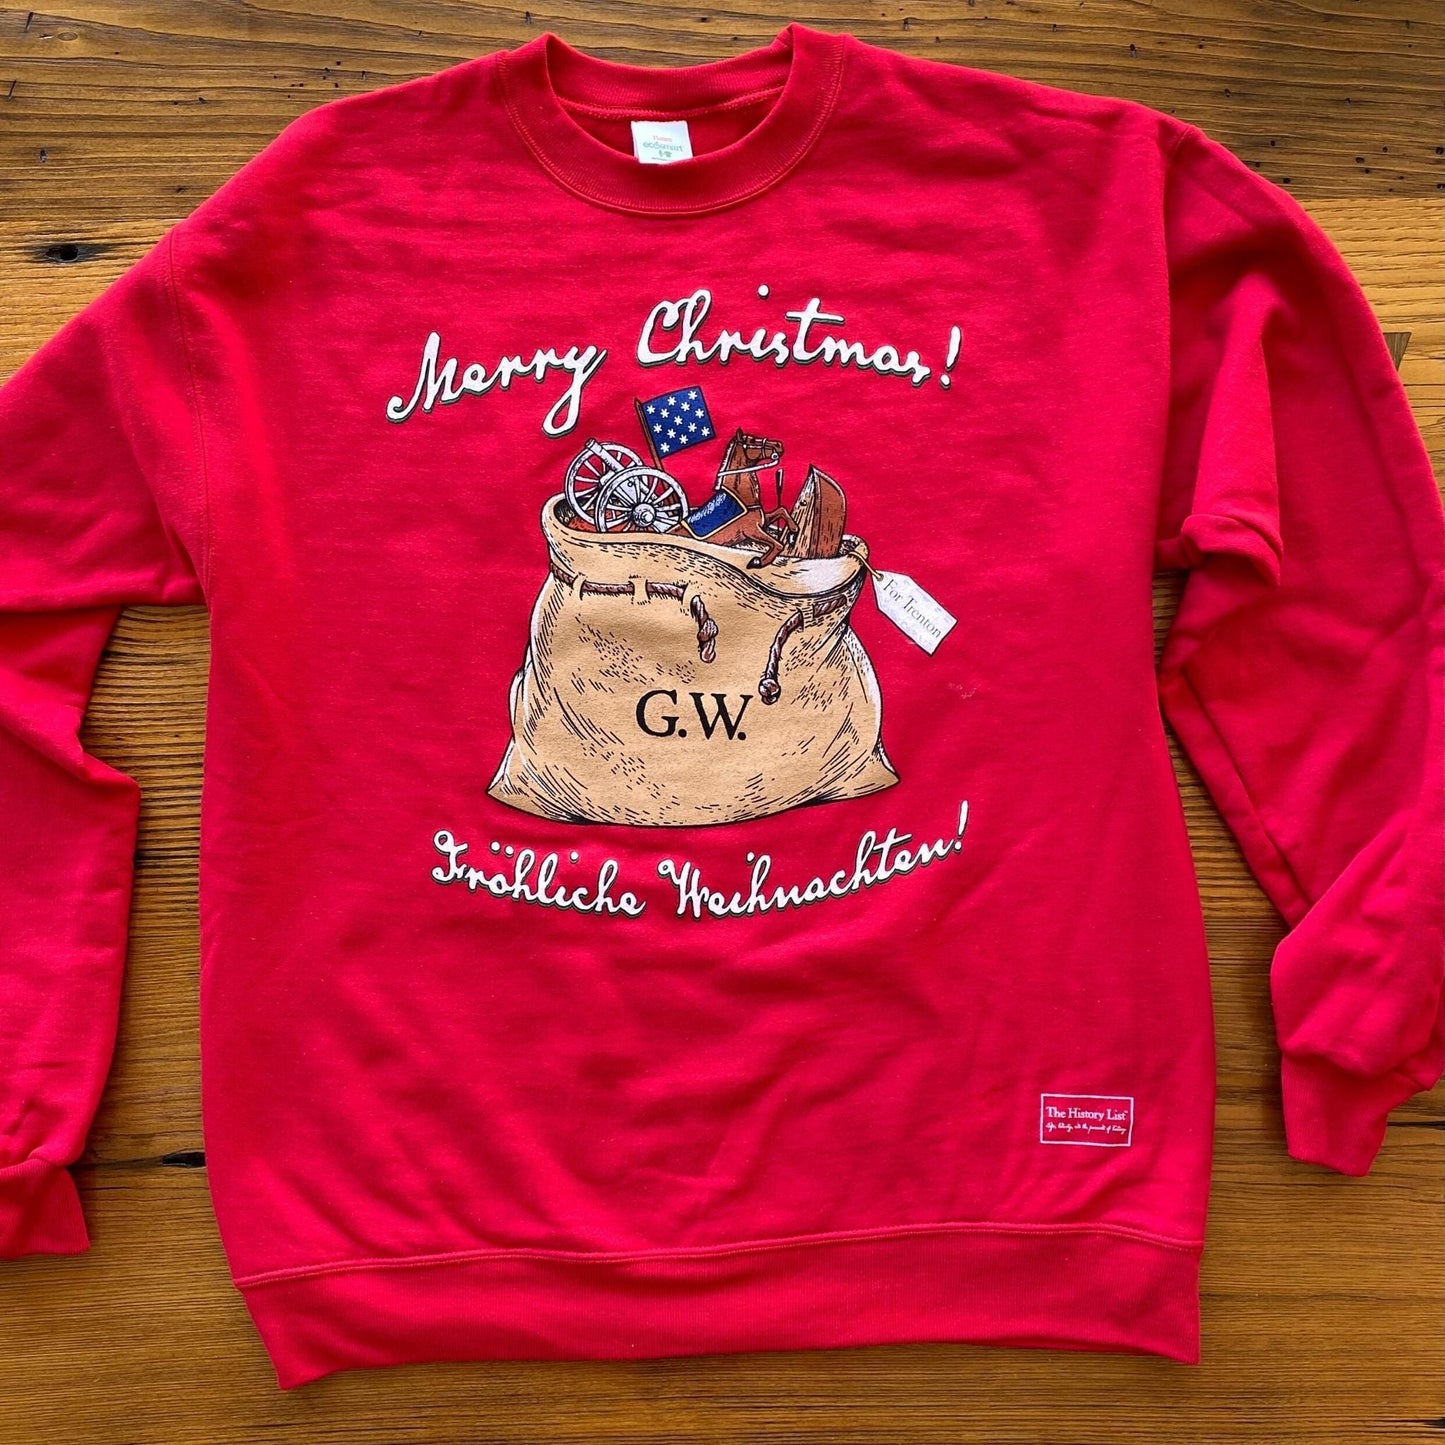 George Washington's Christmas Day Crossing of the Delaware Crewneck sweatshirt — The Christmas sweatshirt for history nerds